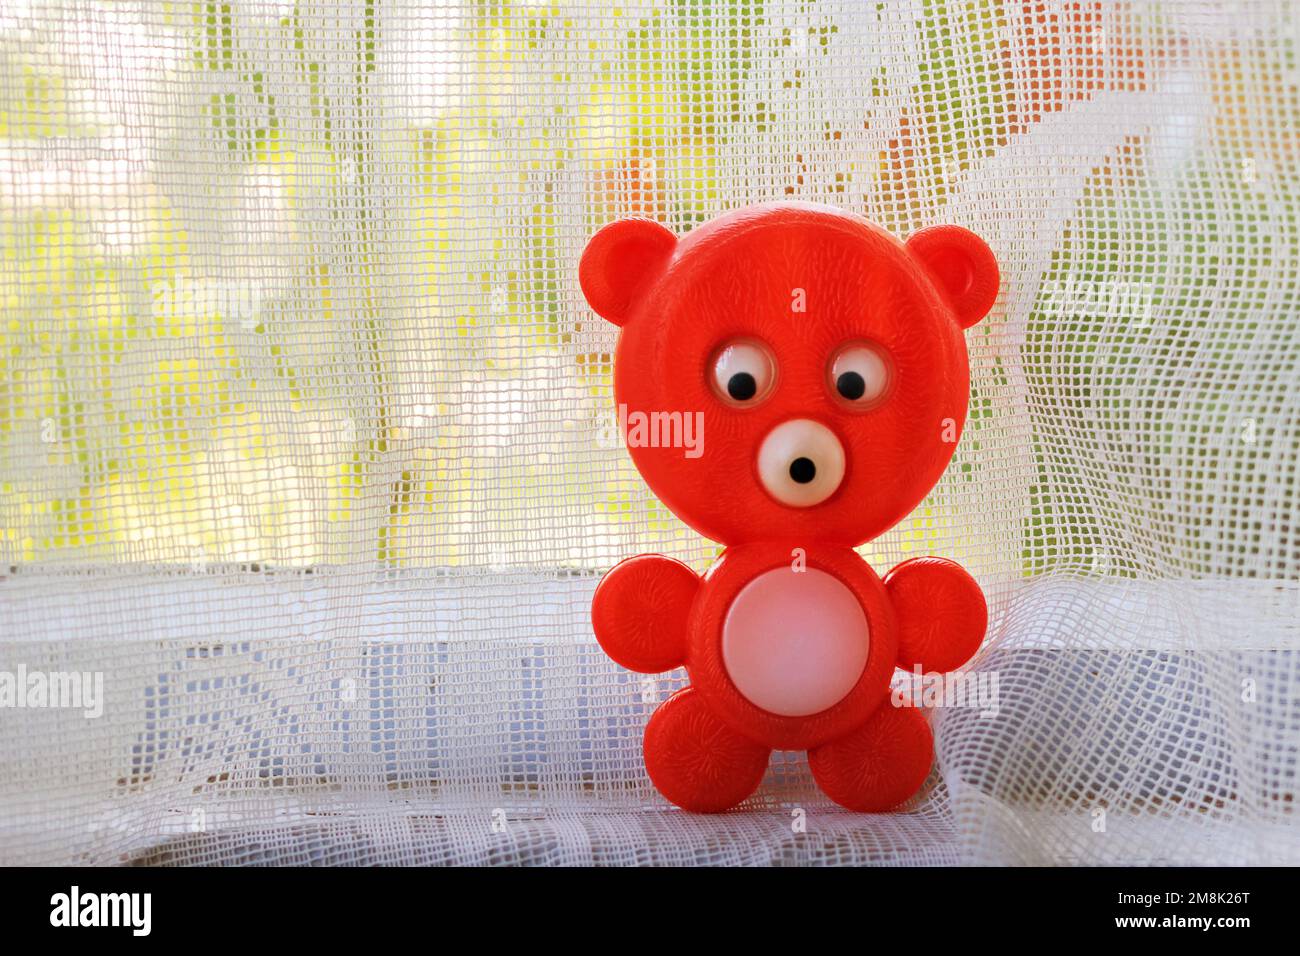 Old soviet plastic toy red bear on the inside window-still Stock Photo